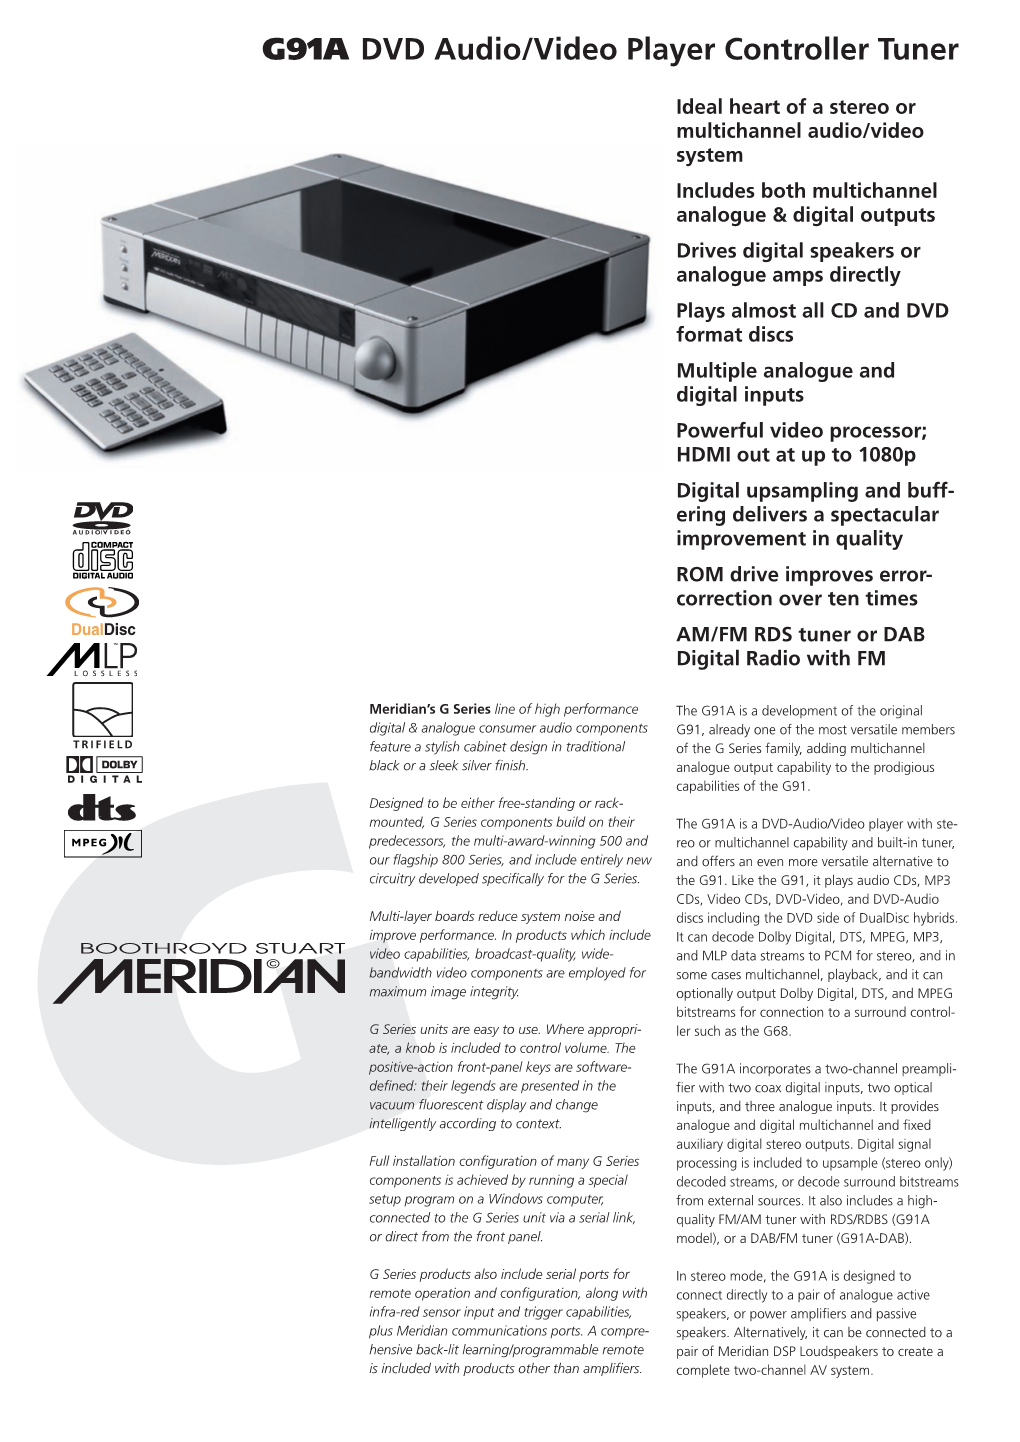 Meridian G91 Data Sheet